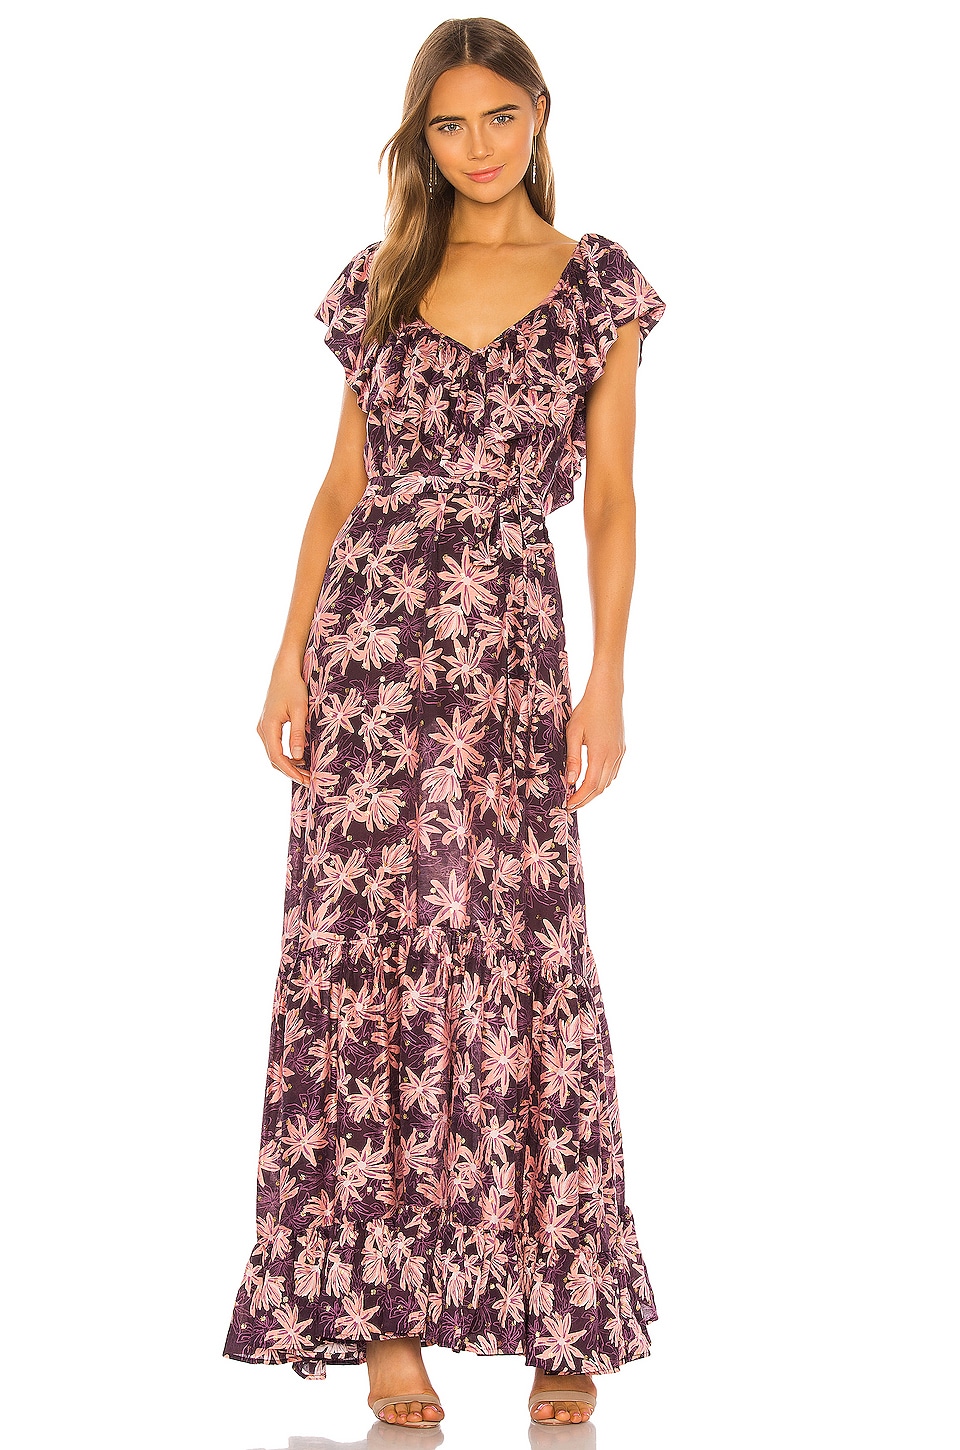 plum floral dress